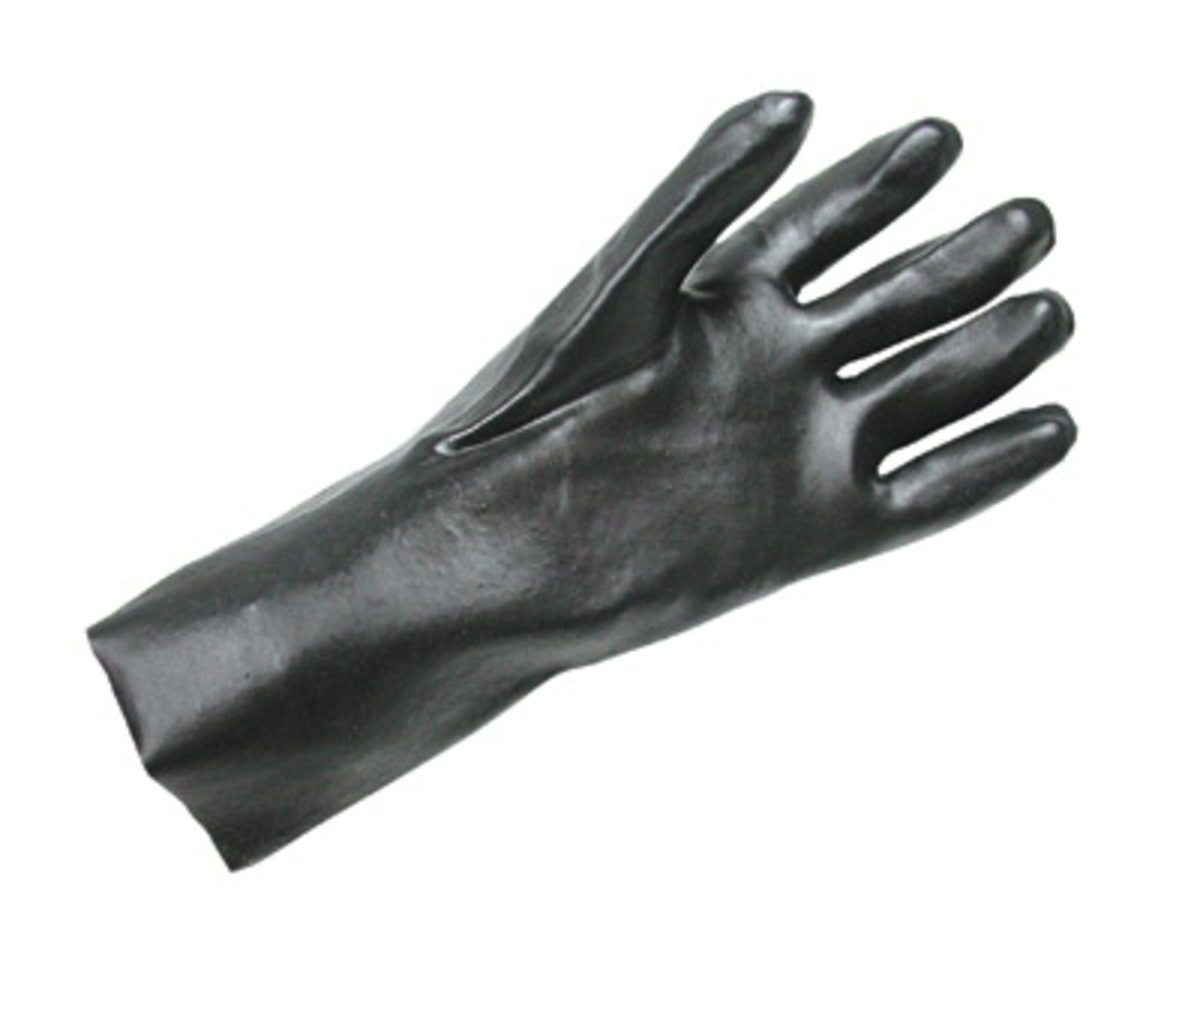 RADNOR® Large Black PVC Chemical Resistant Gloves